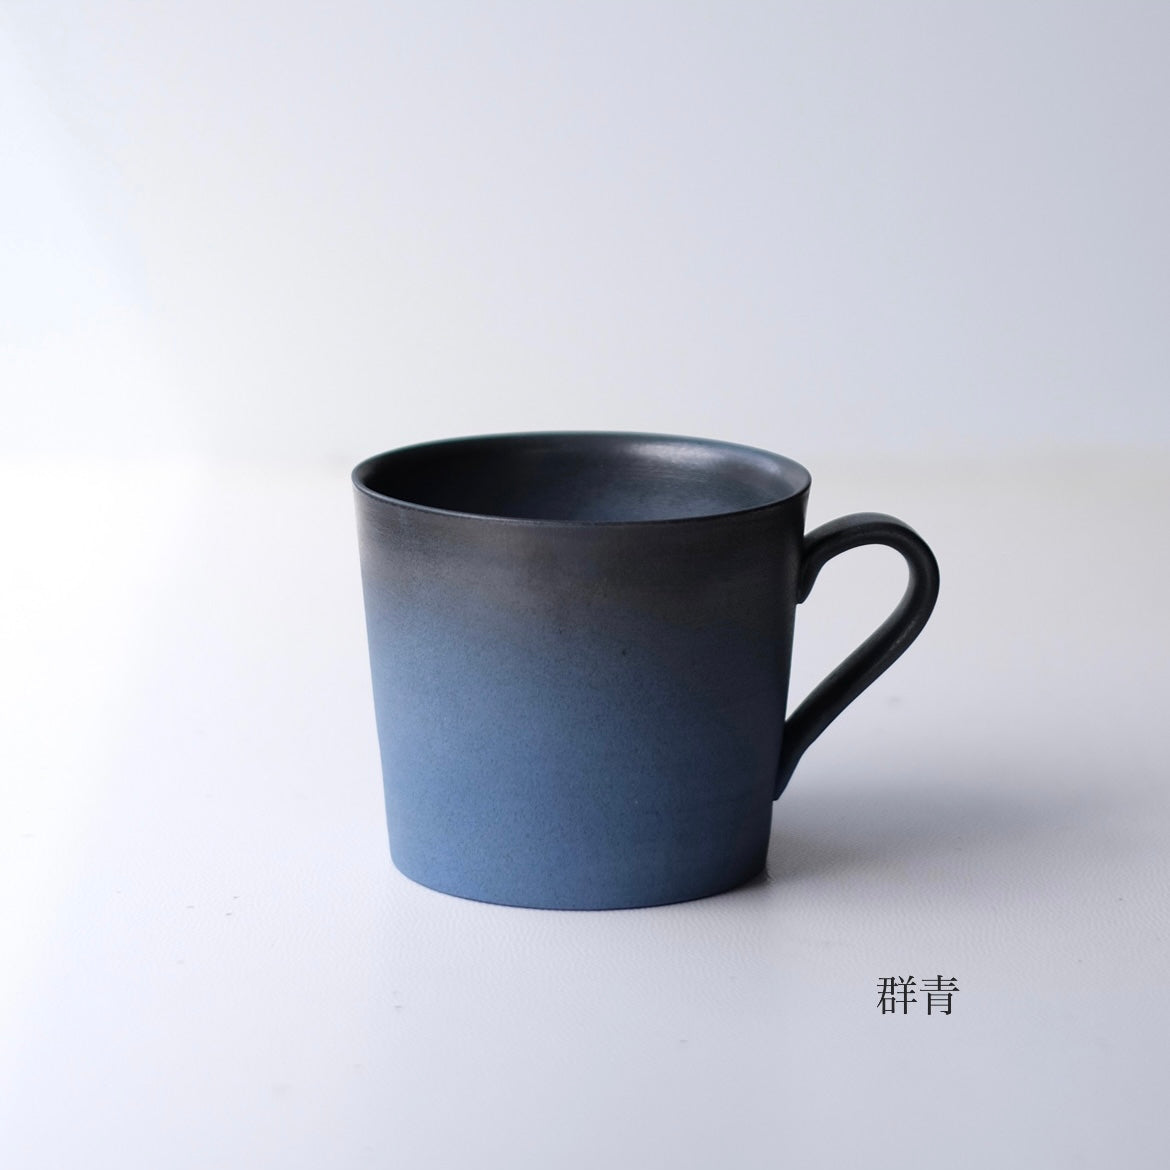 【Gift-wrapped】Bizen mug cup